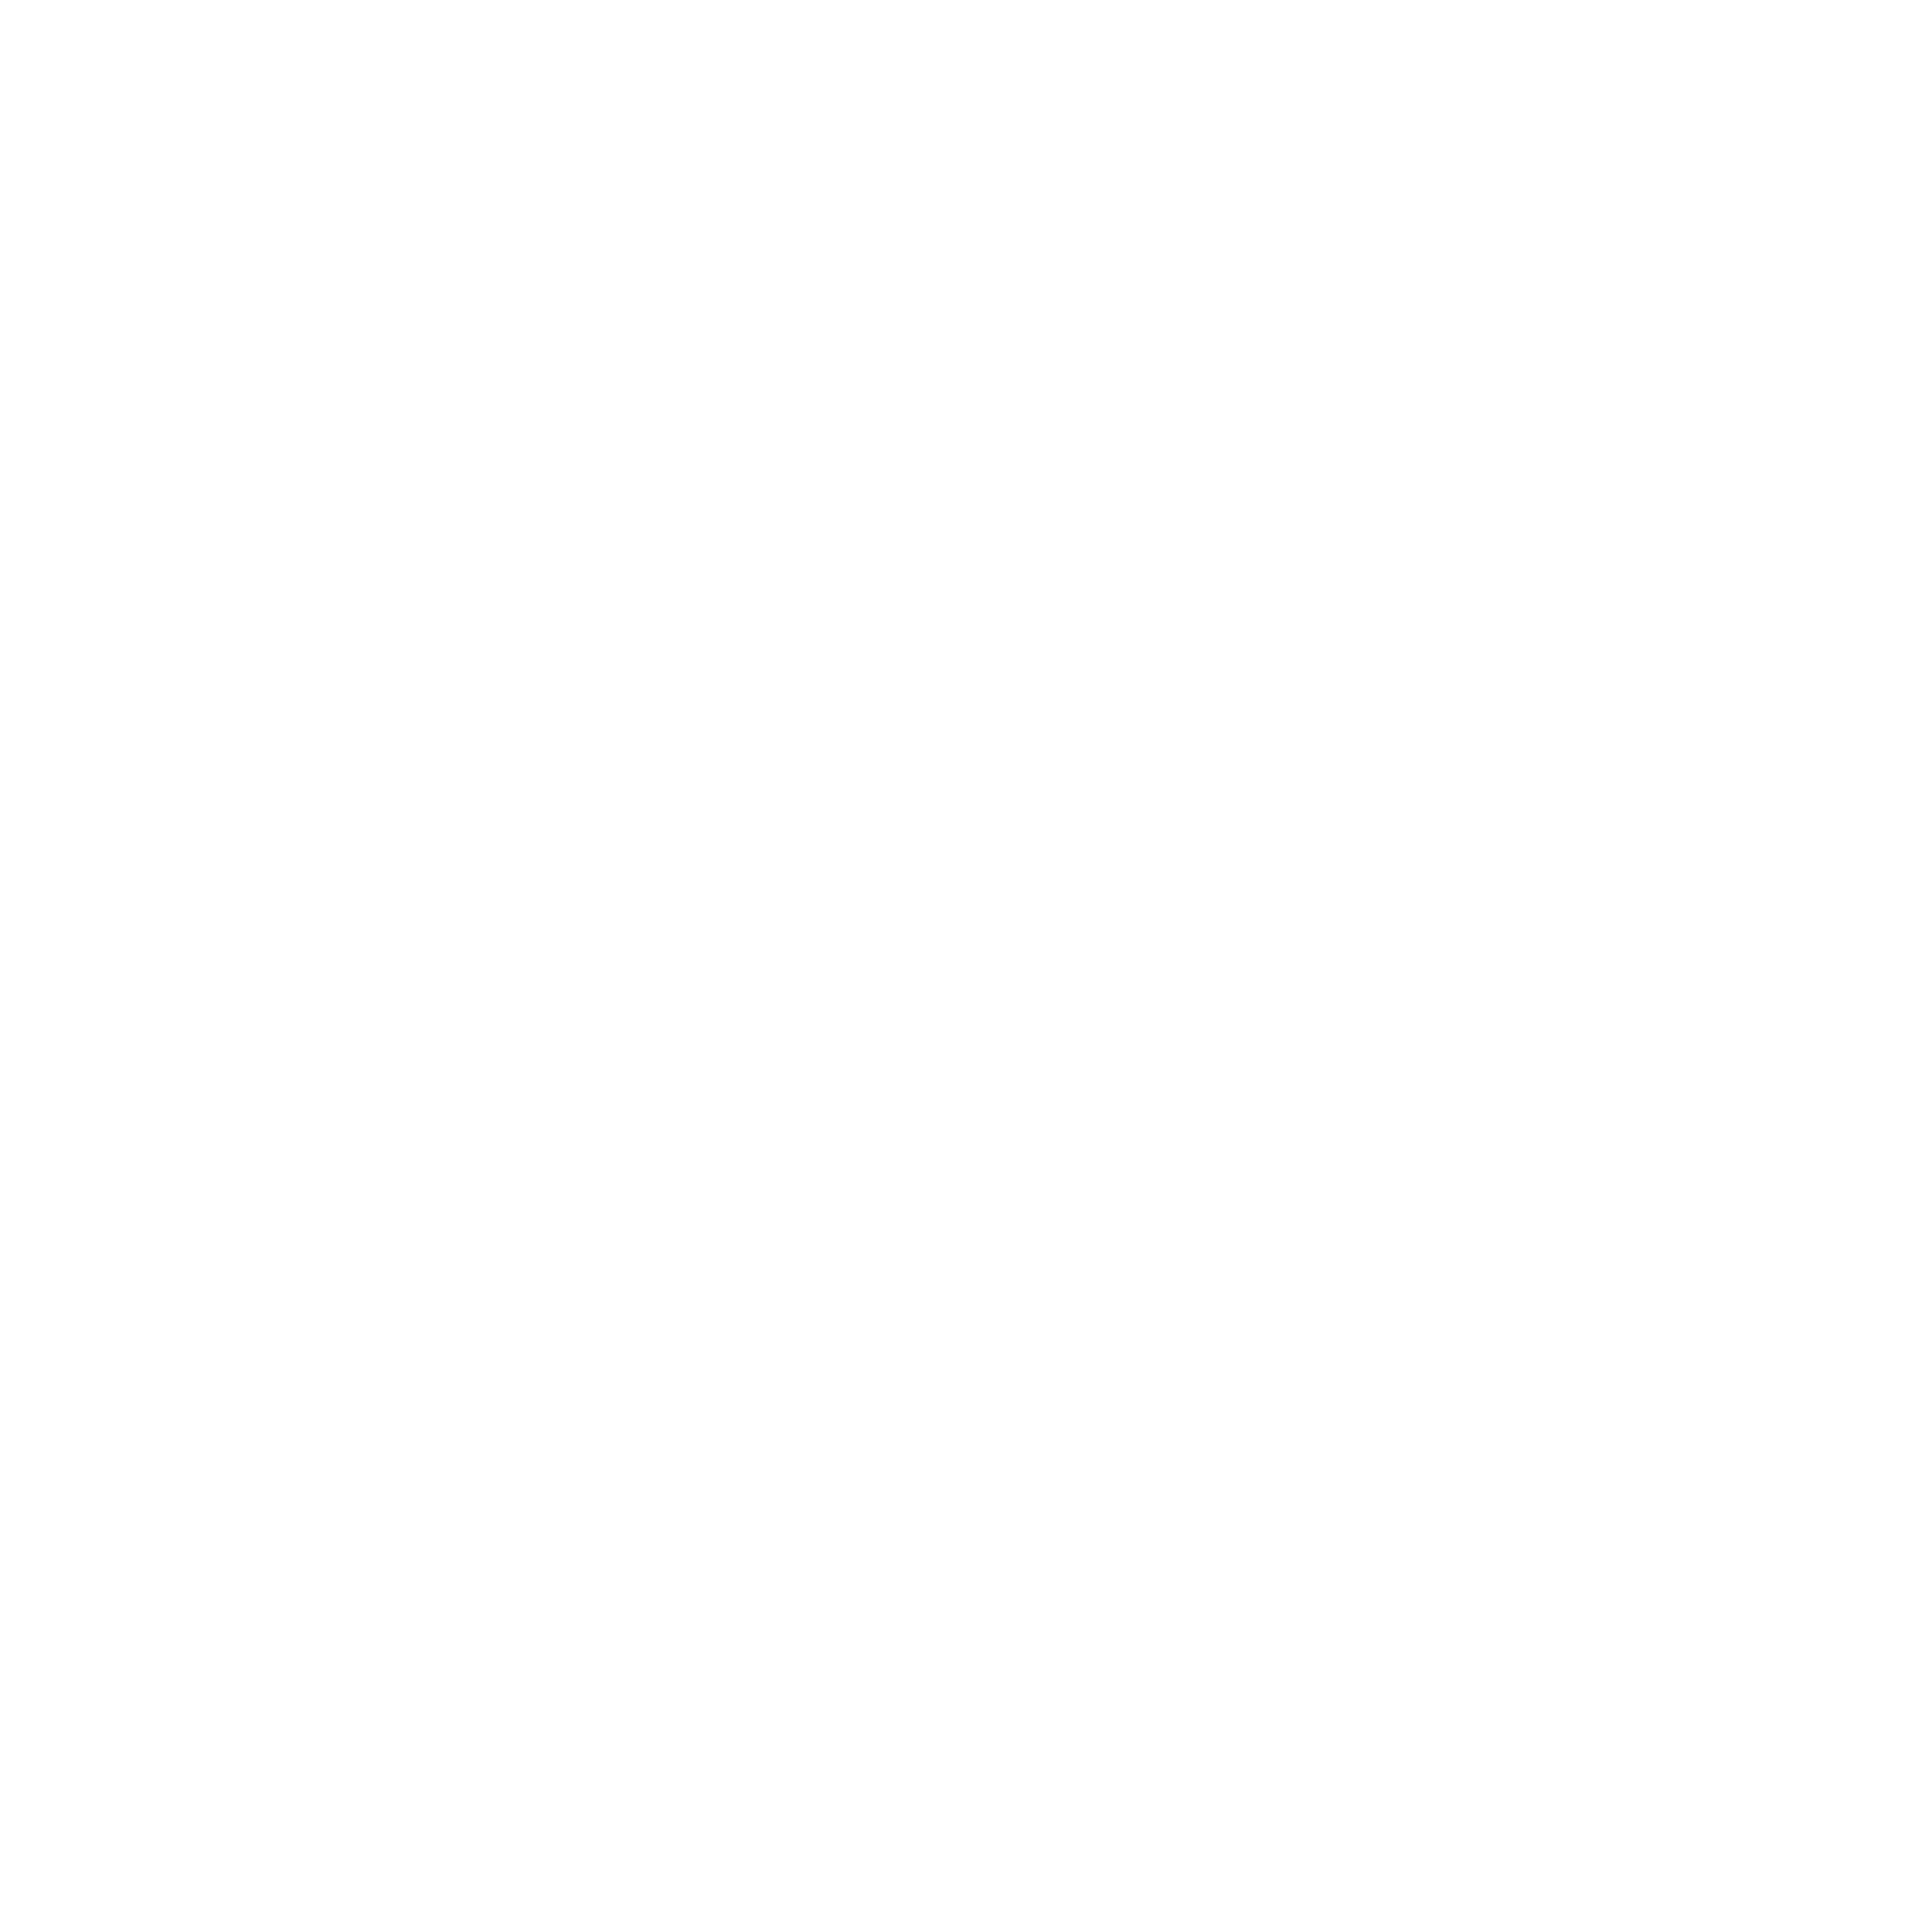 Akademikonferens